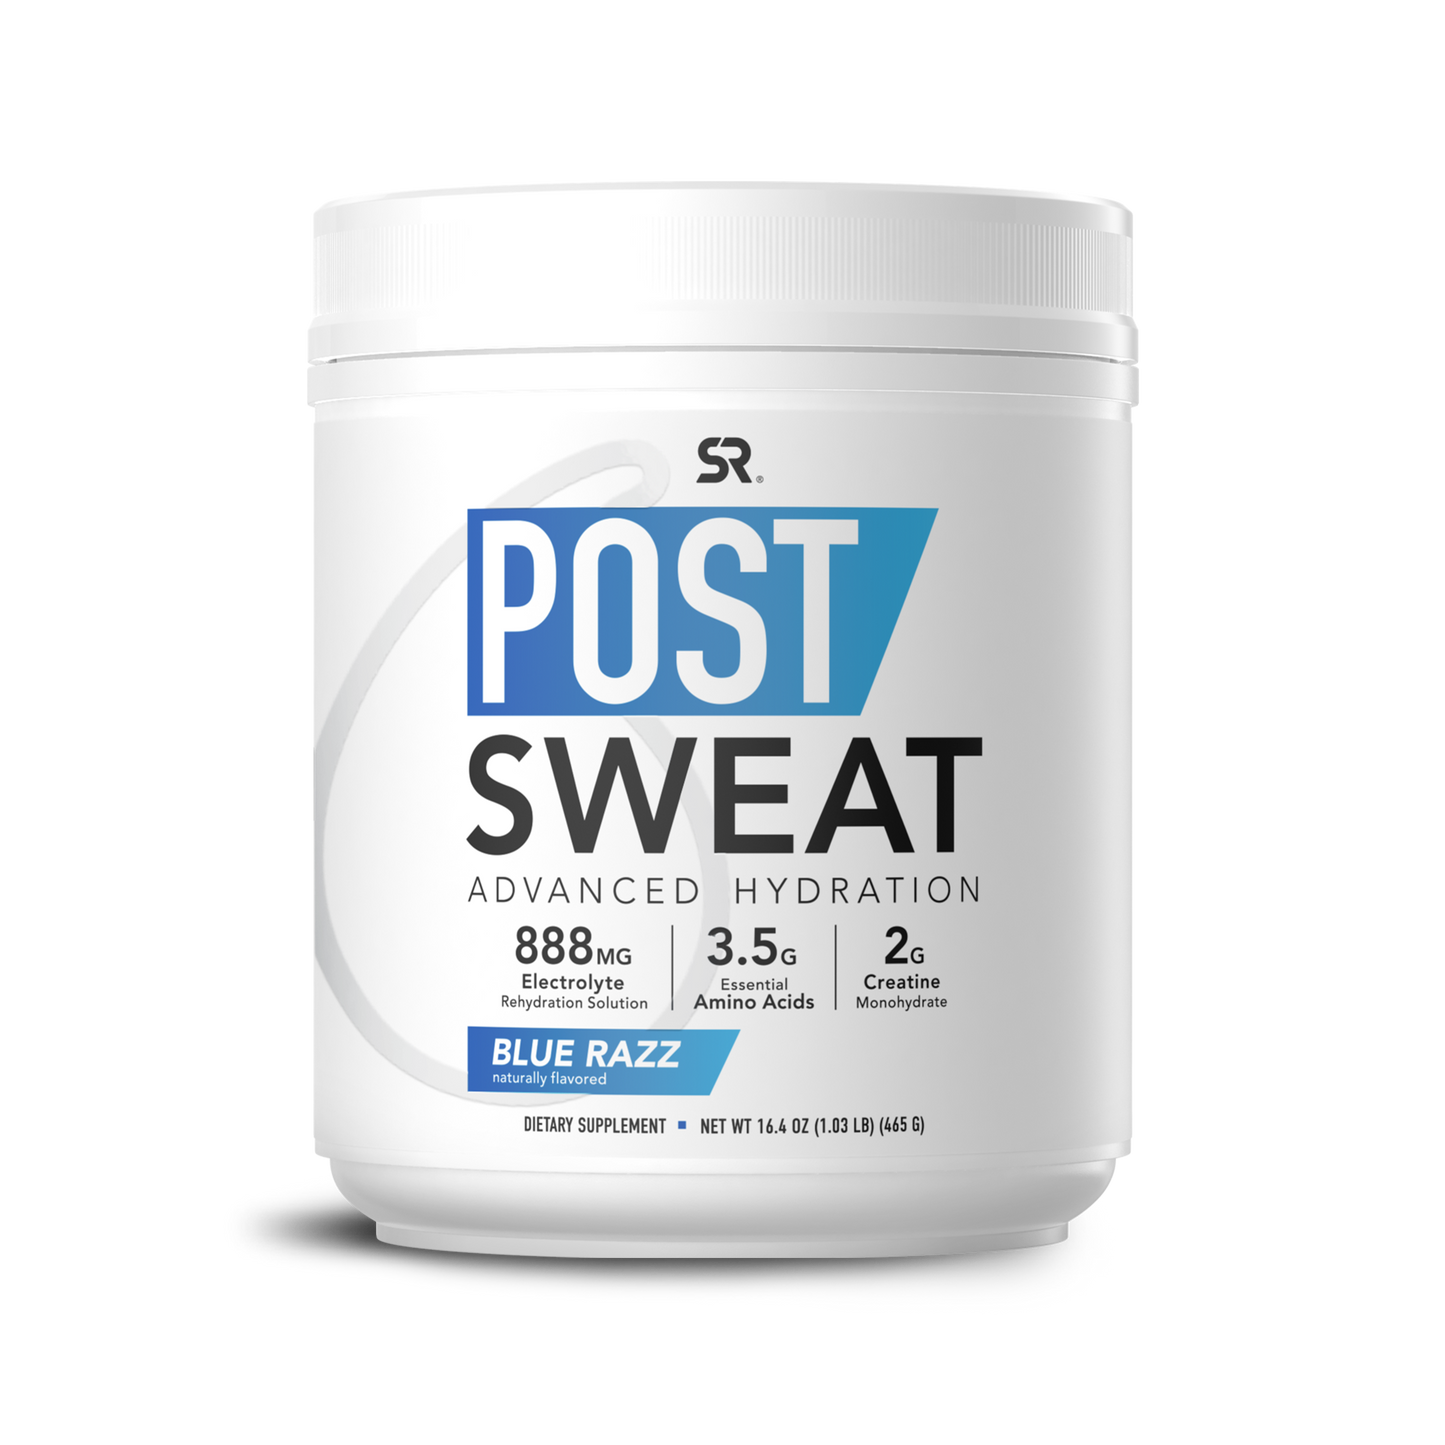 Tub of Sports Research® Post Sweat Advanced Hydration powder, Blue Razz flavored.